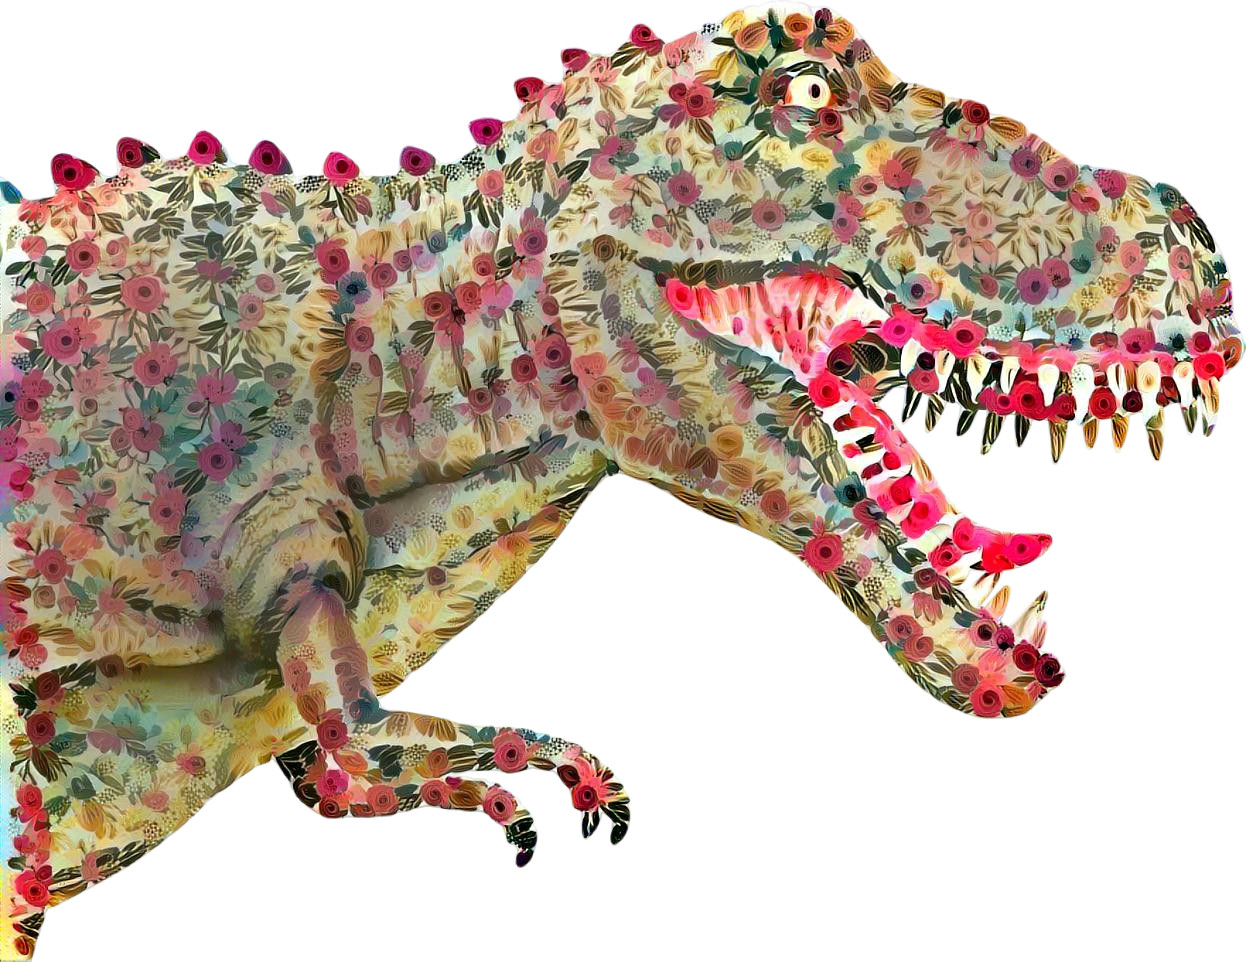 Fashionsaurus Rex